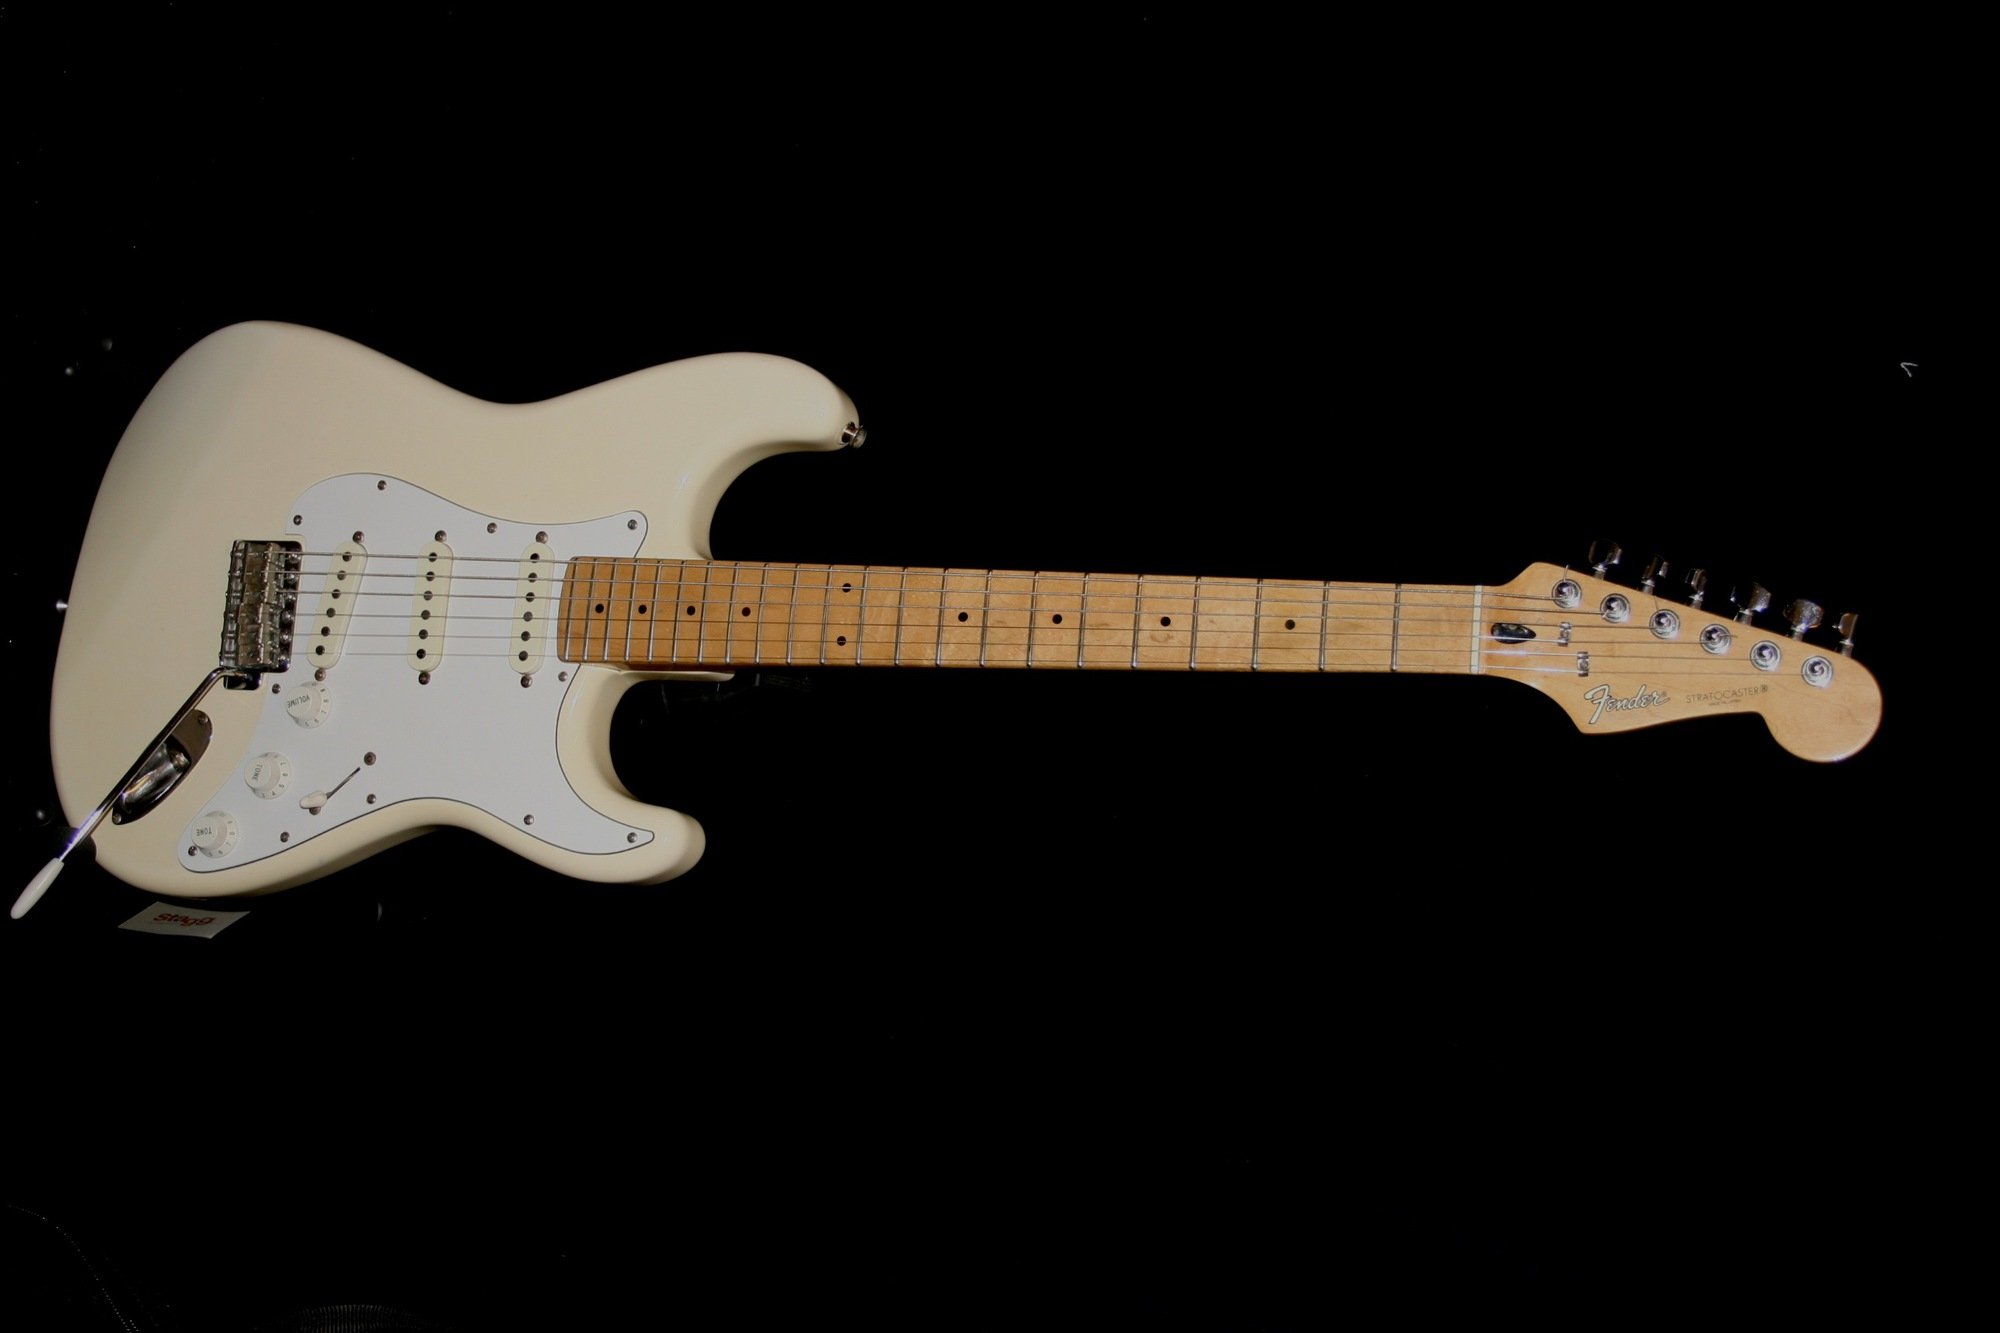 White stratocaster. Стратокастер гитара Fender. Fender Stratocaster белый. Гитара Fender Stratocaster белая. Жлектро ритара Фендер стратокастер бкла.